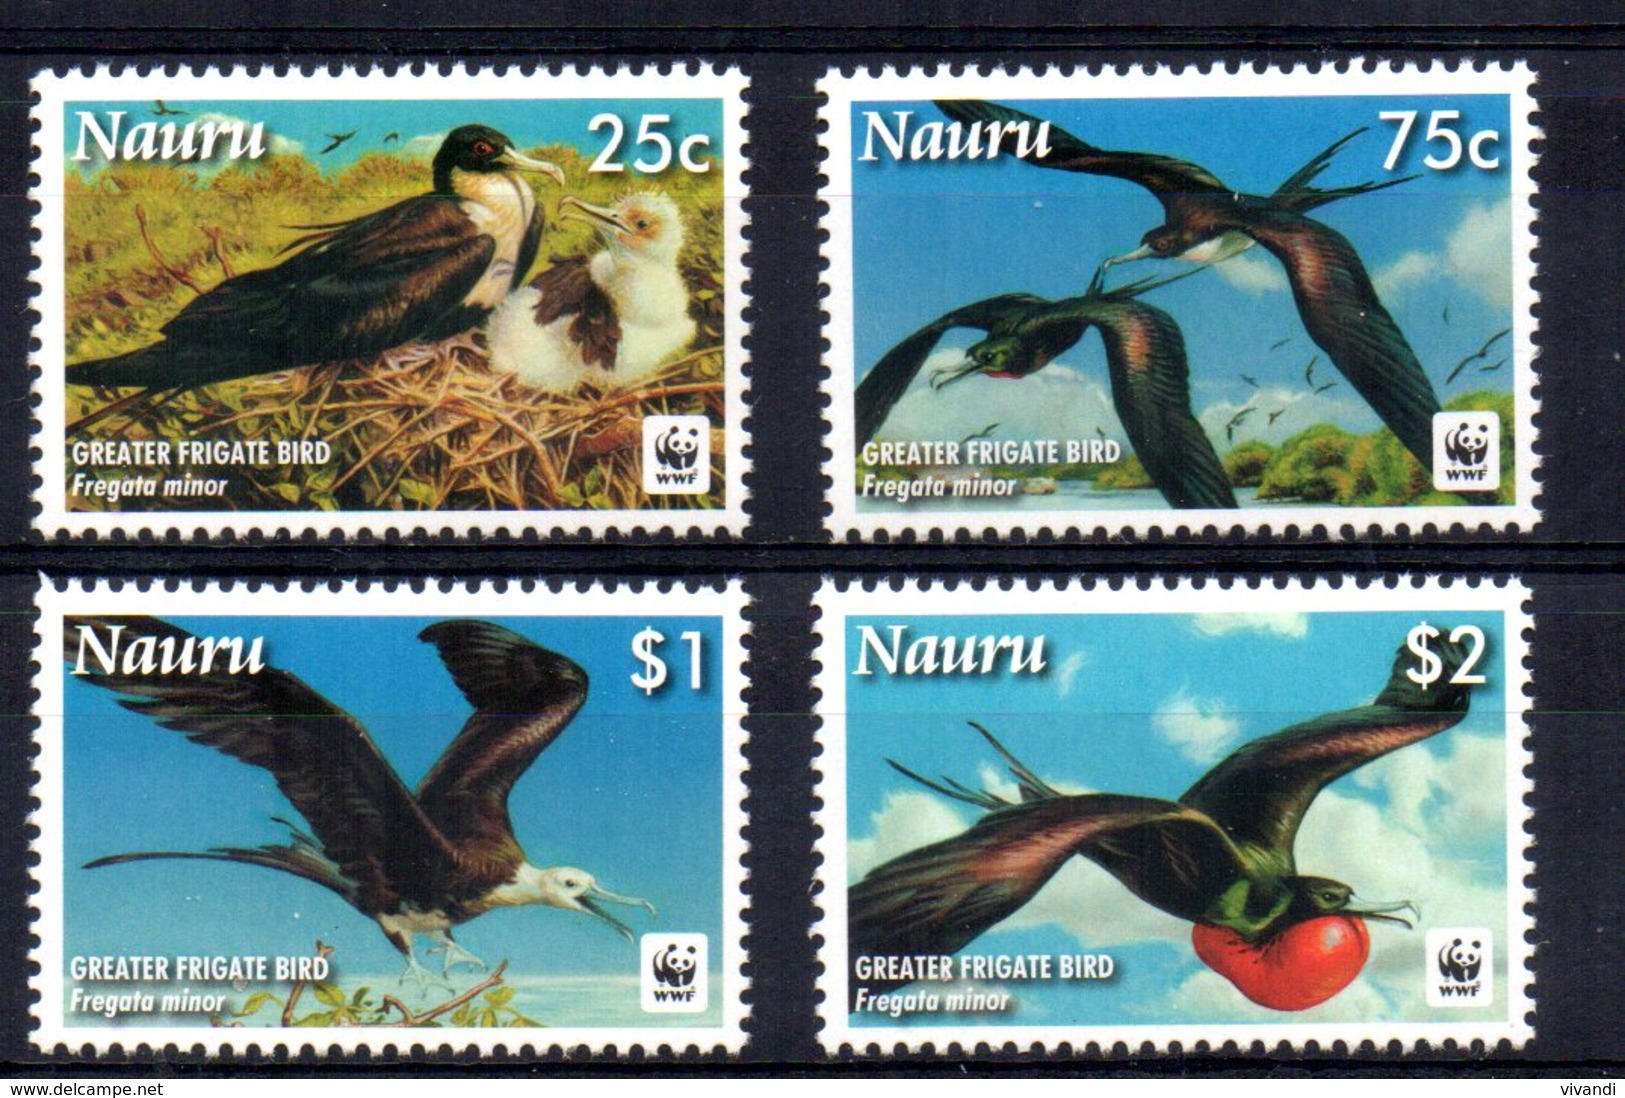 Nauru - 2008 - Endangered Species/Greater Frigate Bird - MNH - Nauru